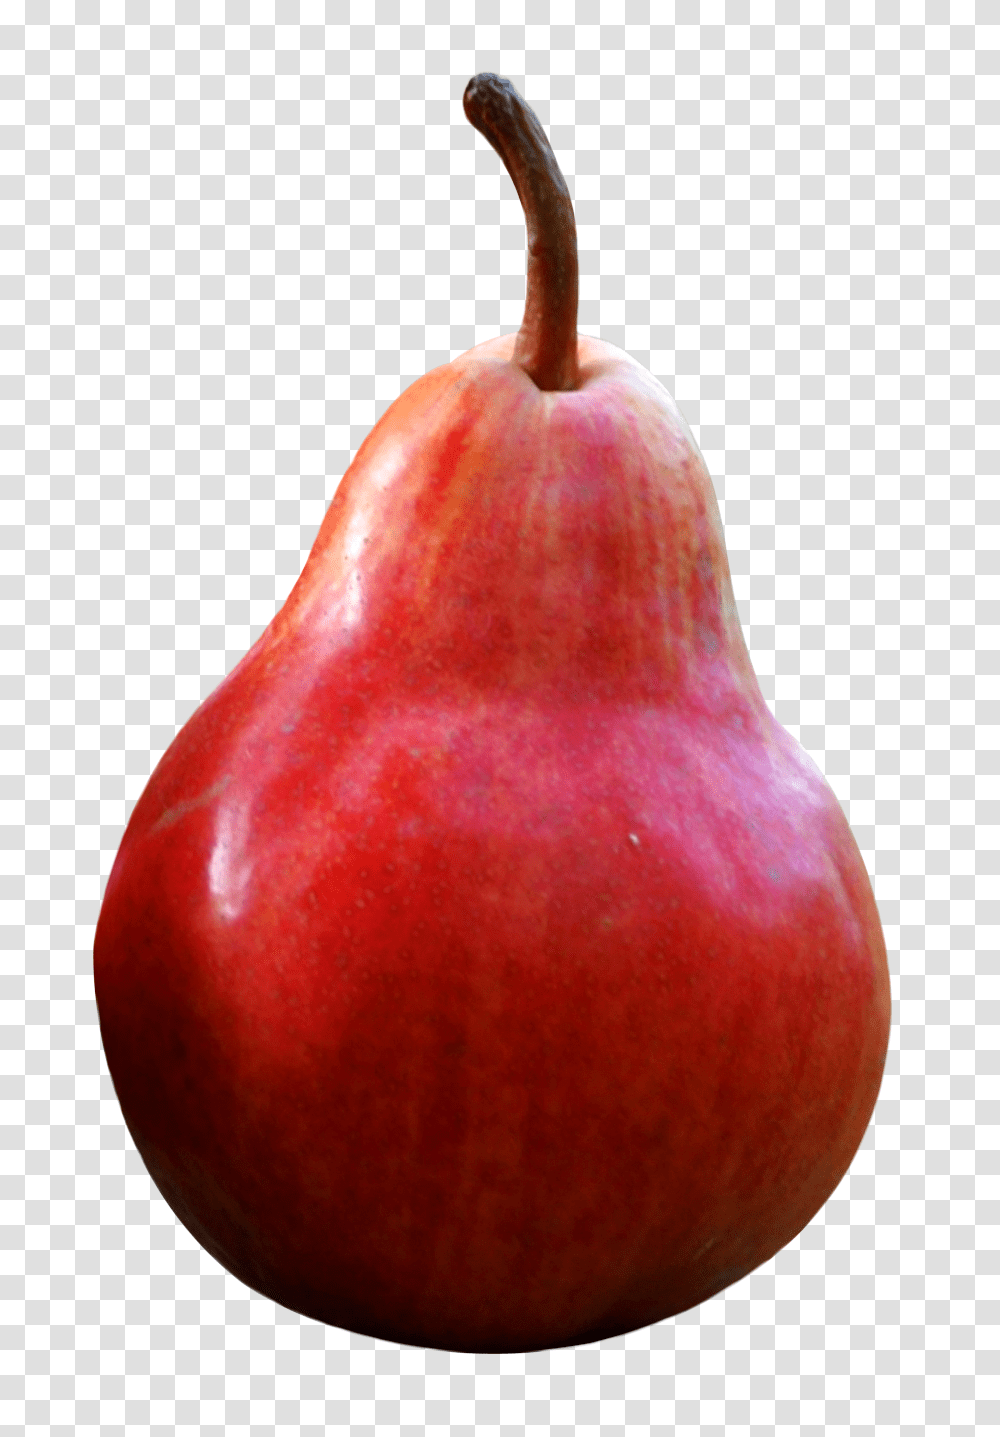 Red Pear Image, Fruit, Plant, Food, Apple Transparent Png